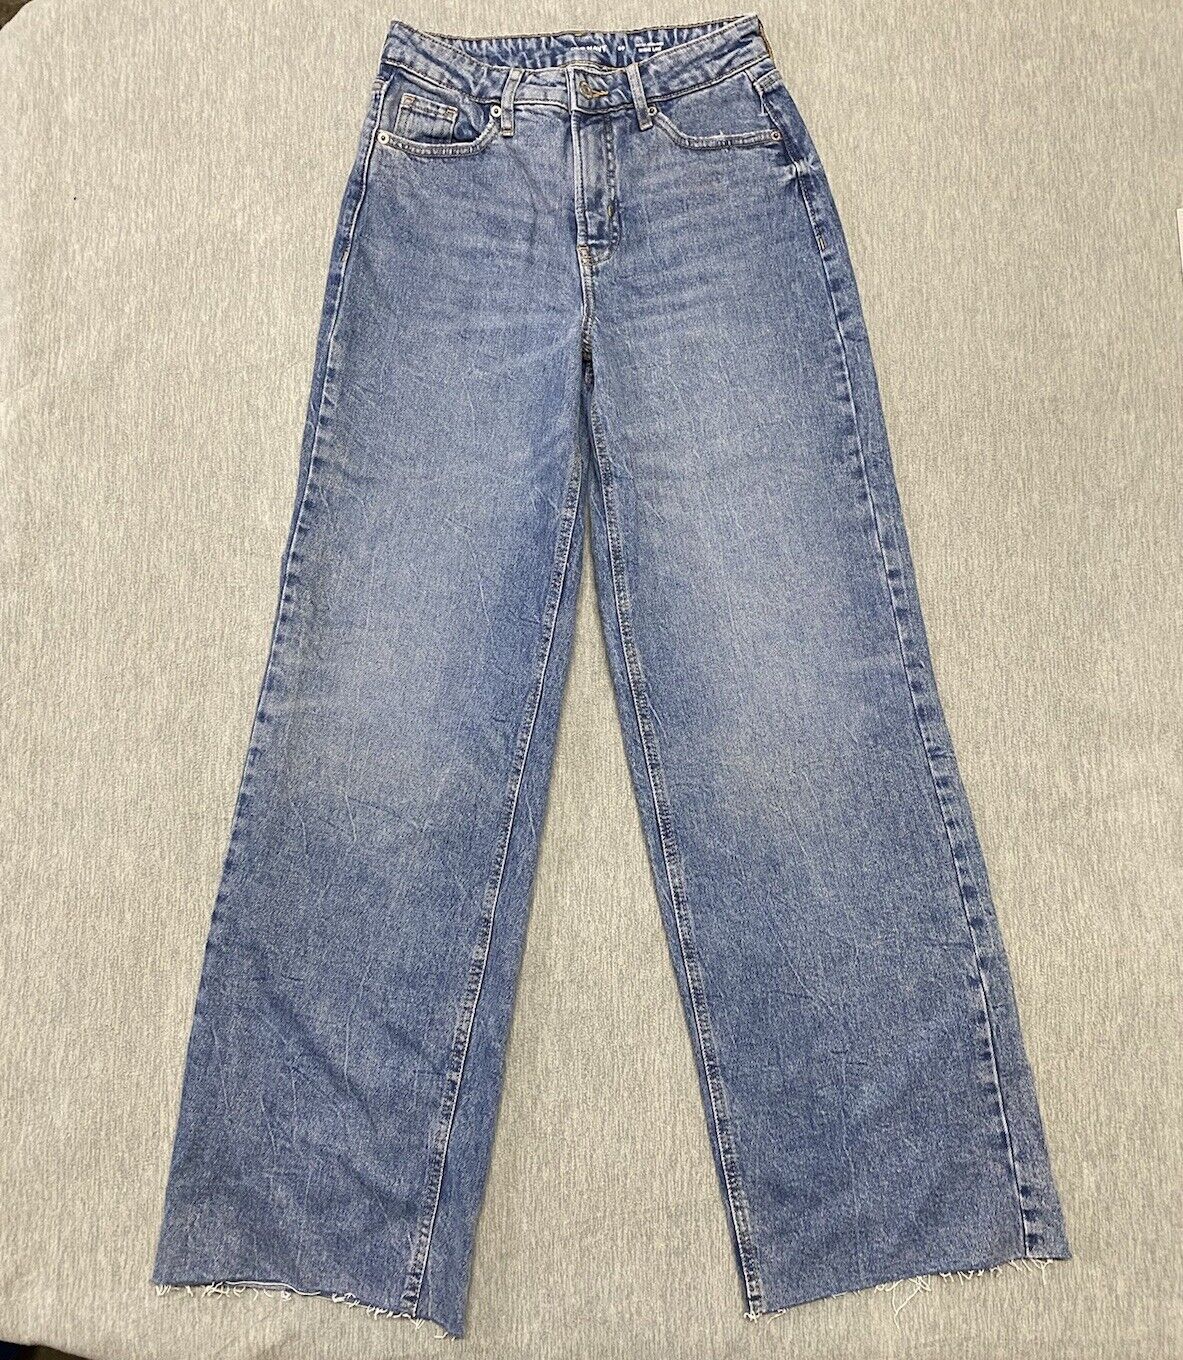 Old Navy Jeans Womens 00 Wide Leg Blue Denim Pants 25x30 Baggy Raw Hem Skate